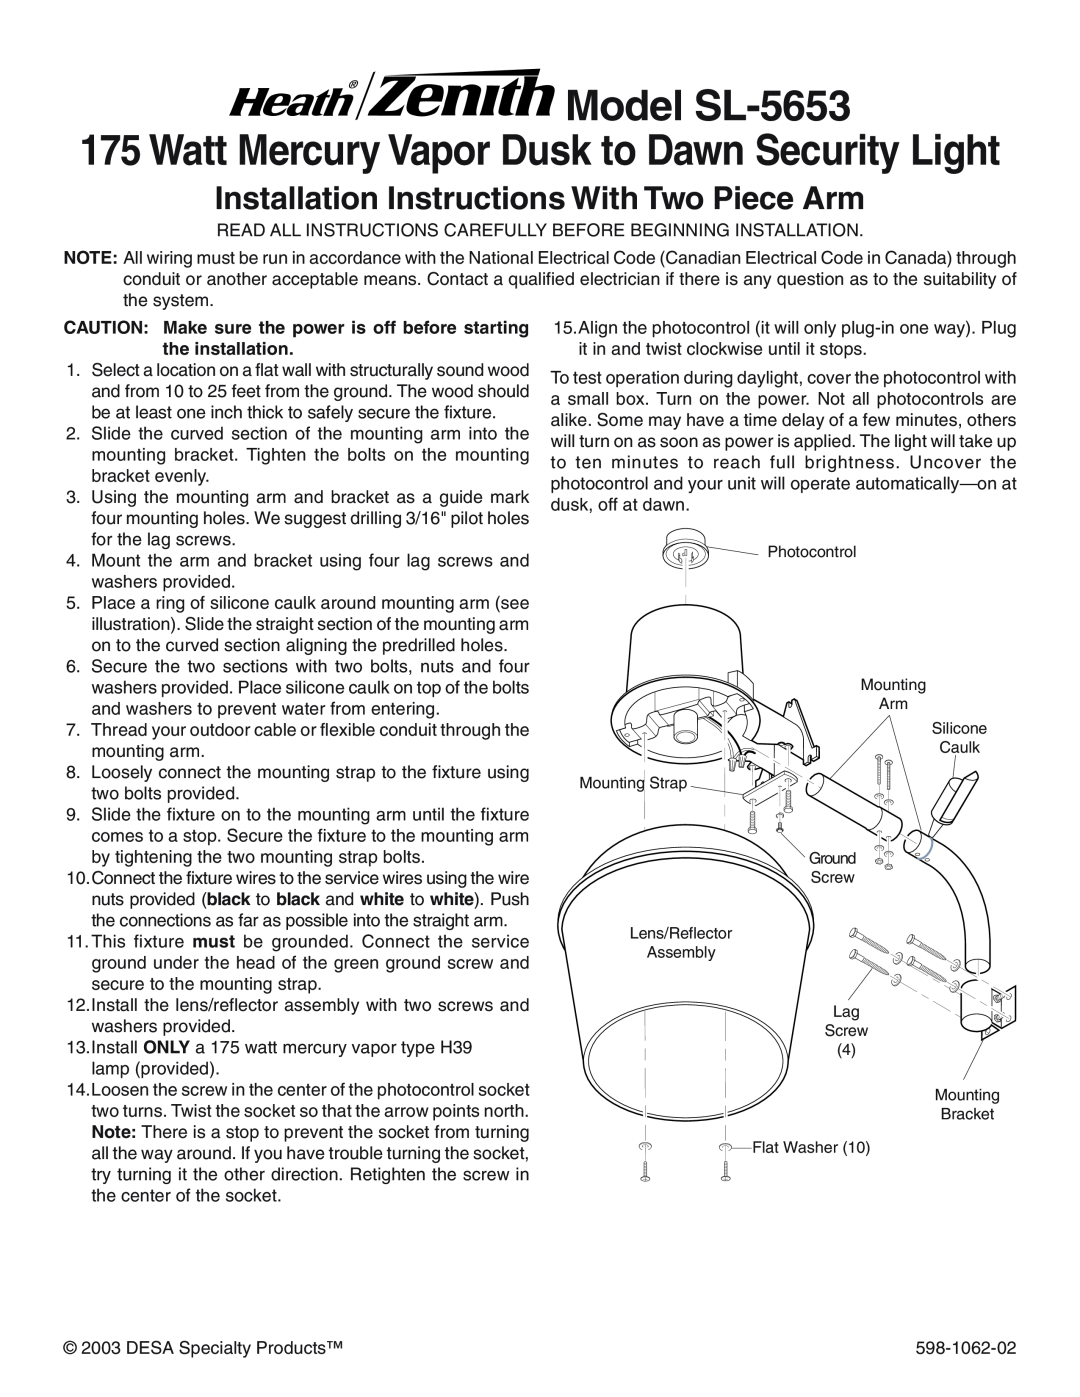 Heath Zenith installation instructions Model SL-5653, Installation Instructions With Two Piece Arm 